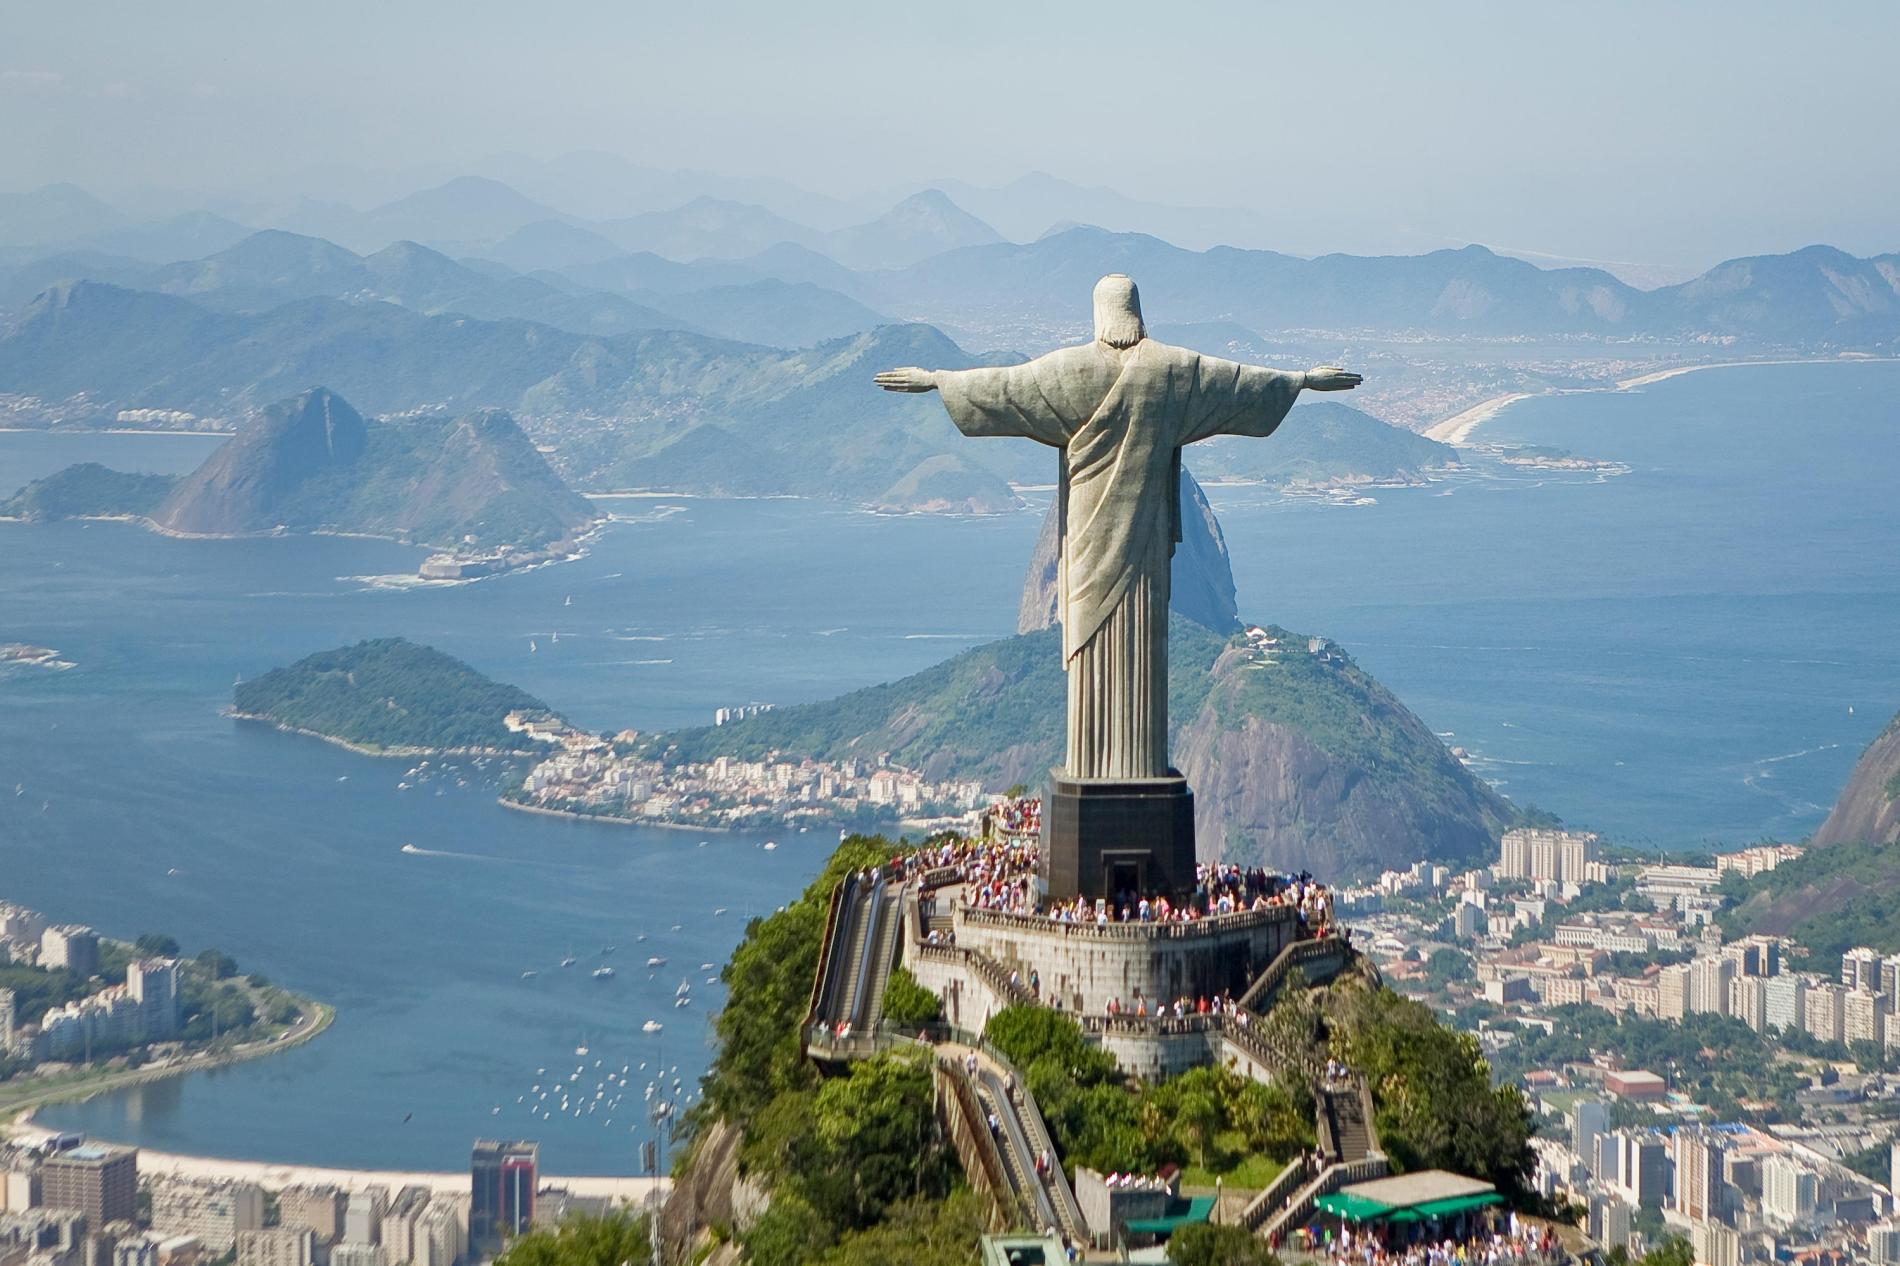 New York to Rio de Janeiro Brazil $421 RT Airfares on COPA Airlines (Flexible Ticket Travel September - October 2021)